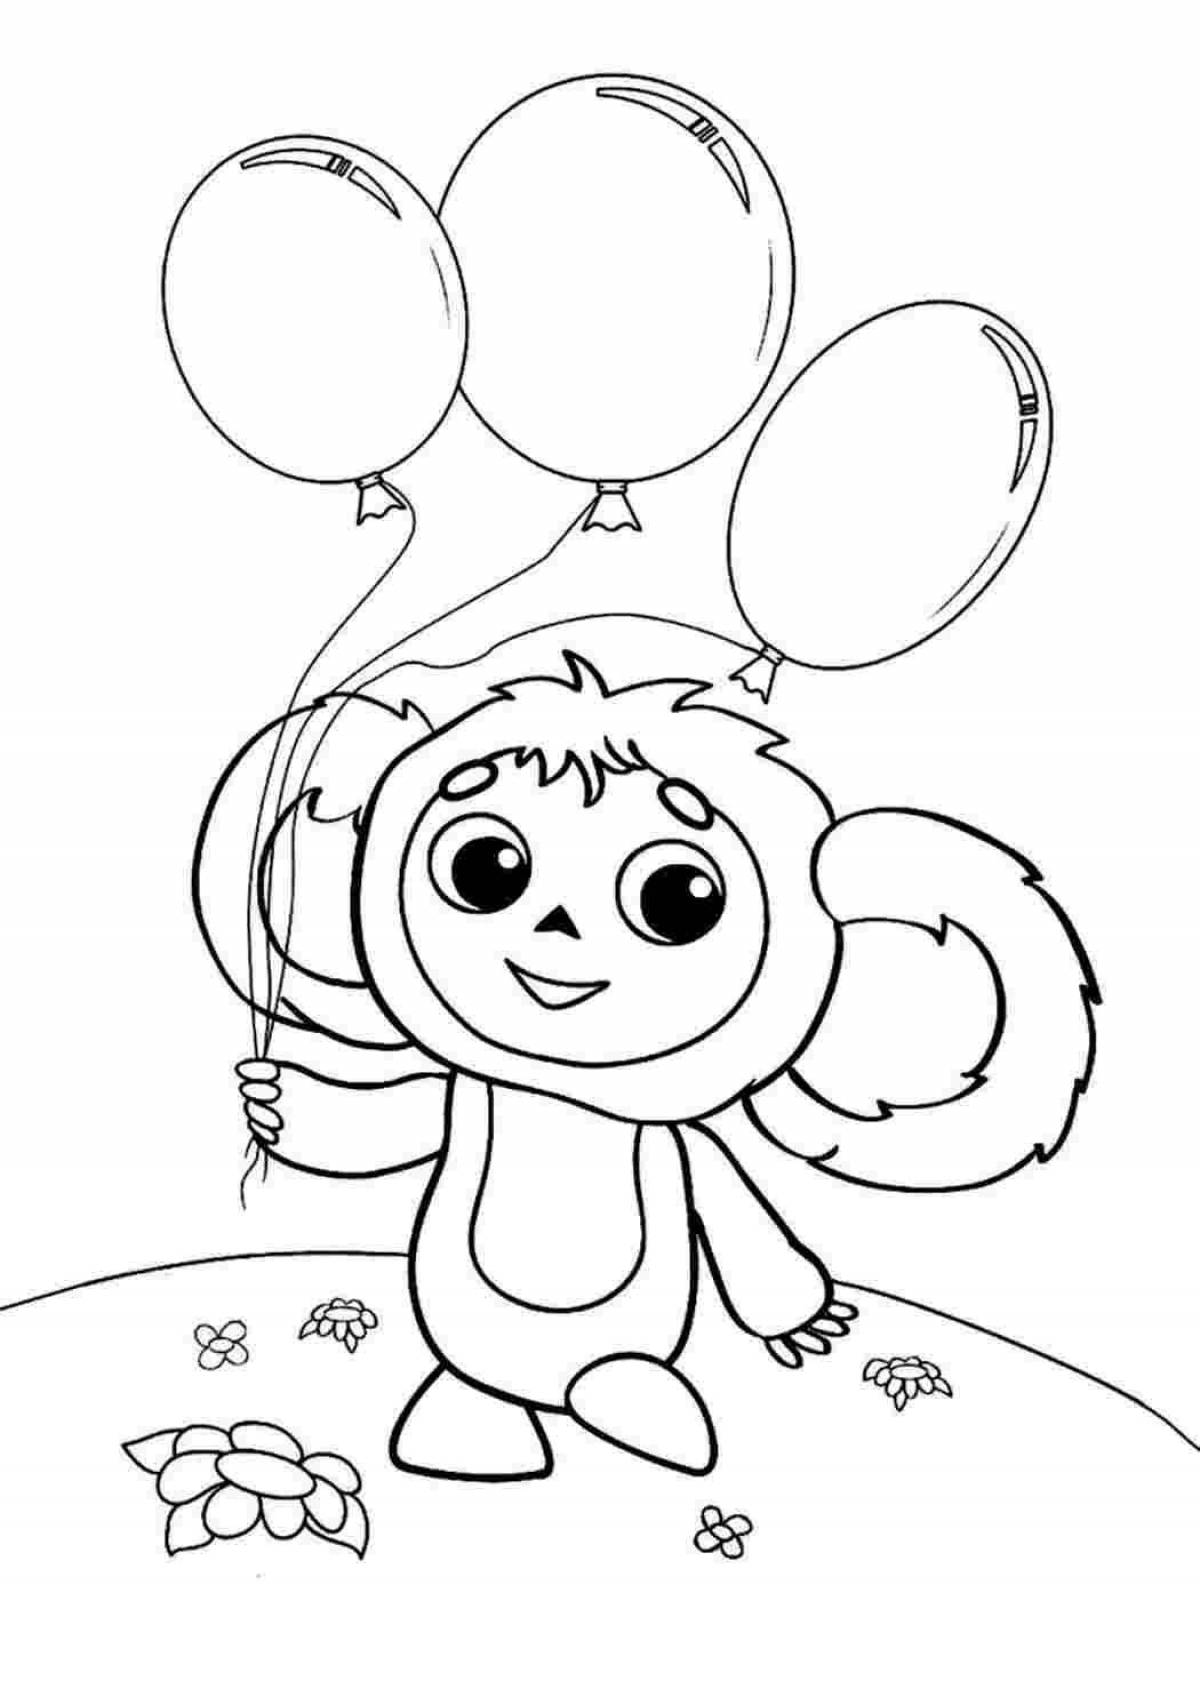 Coloring book joyful cheburashka with polka dots